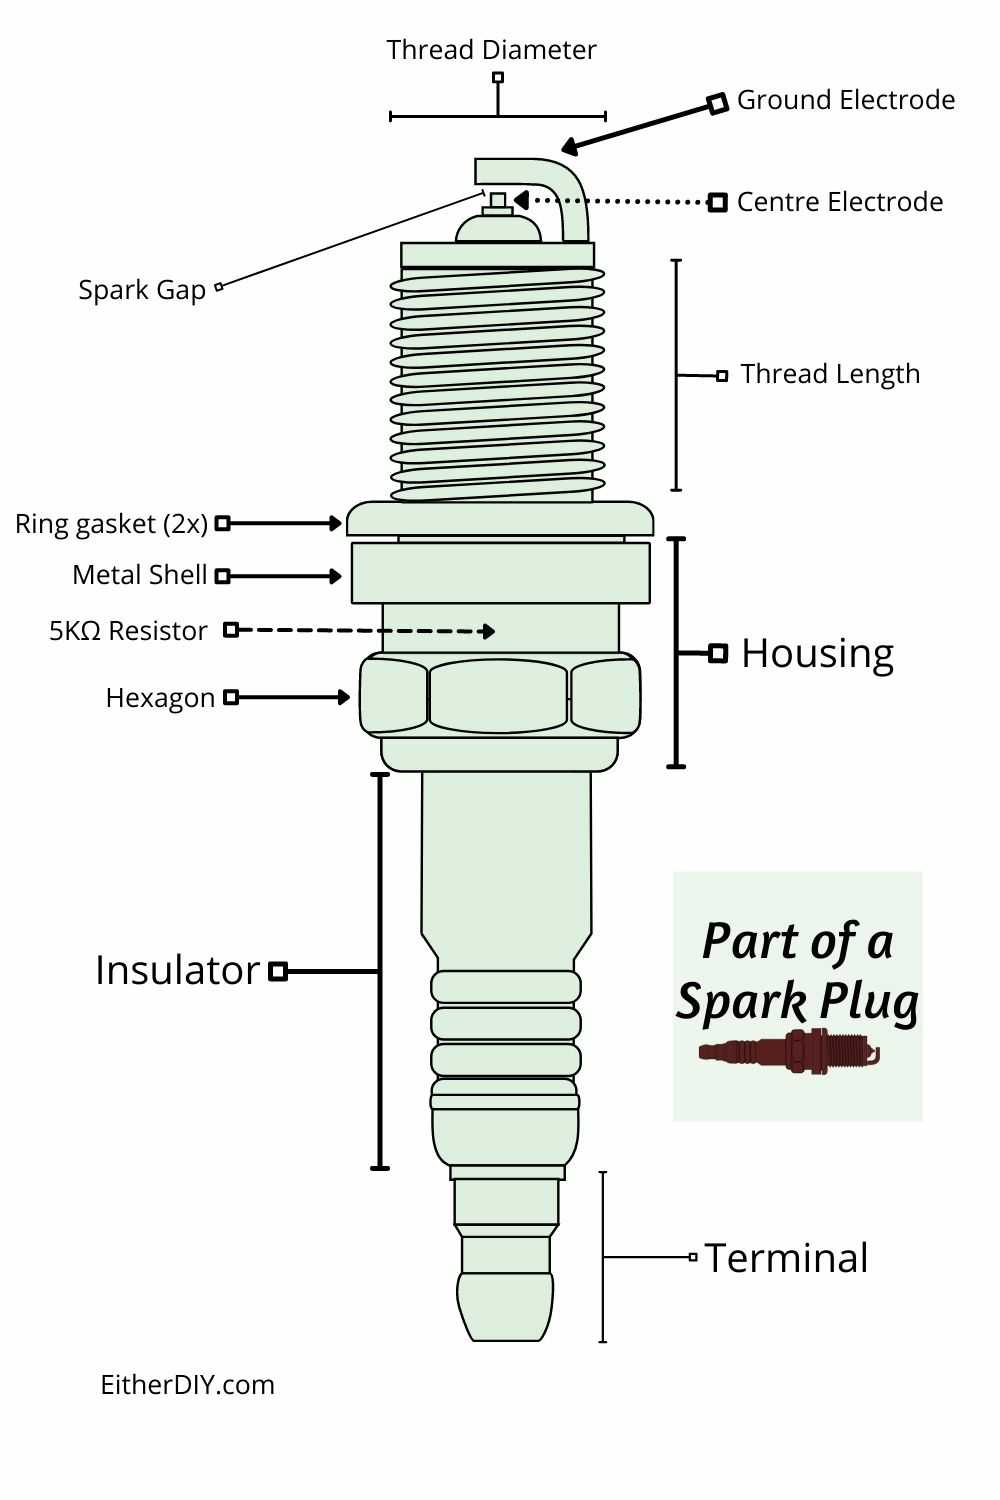 part of spark plug image